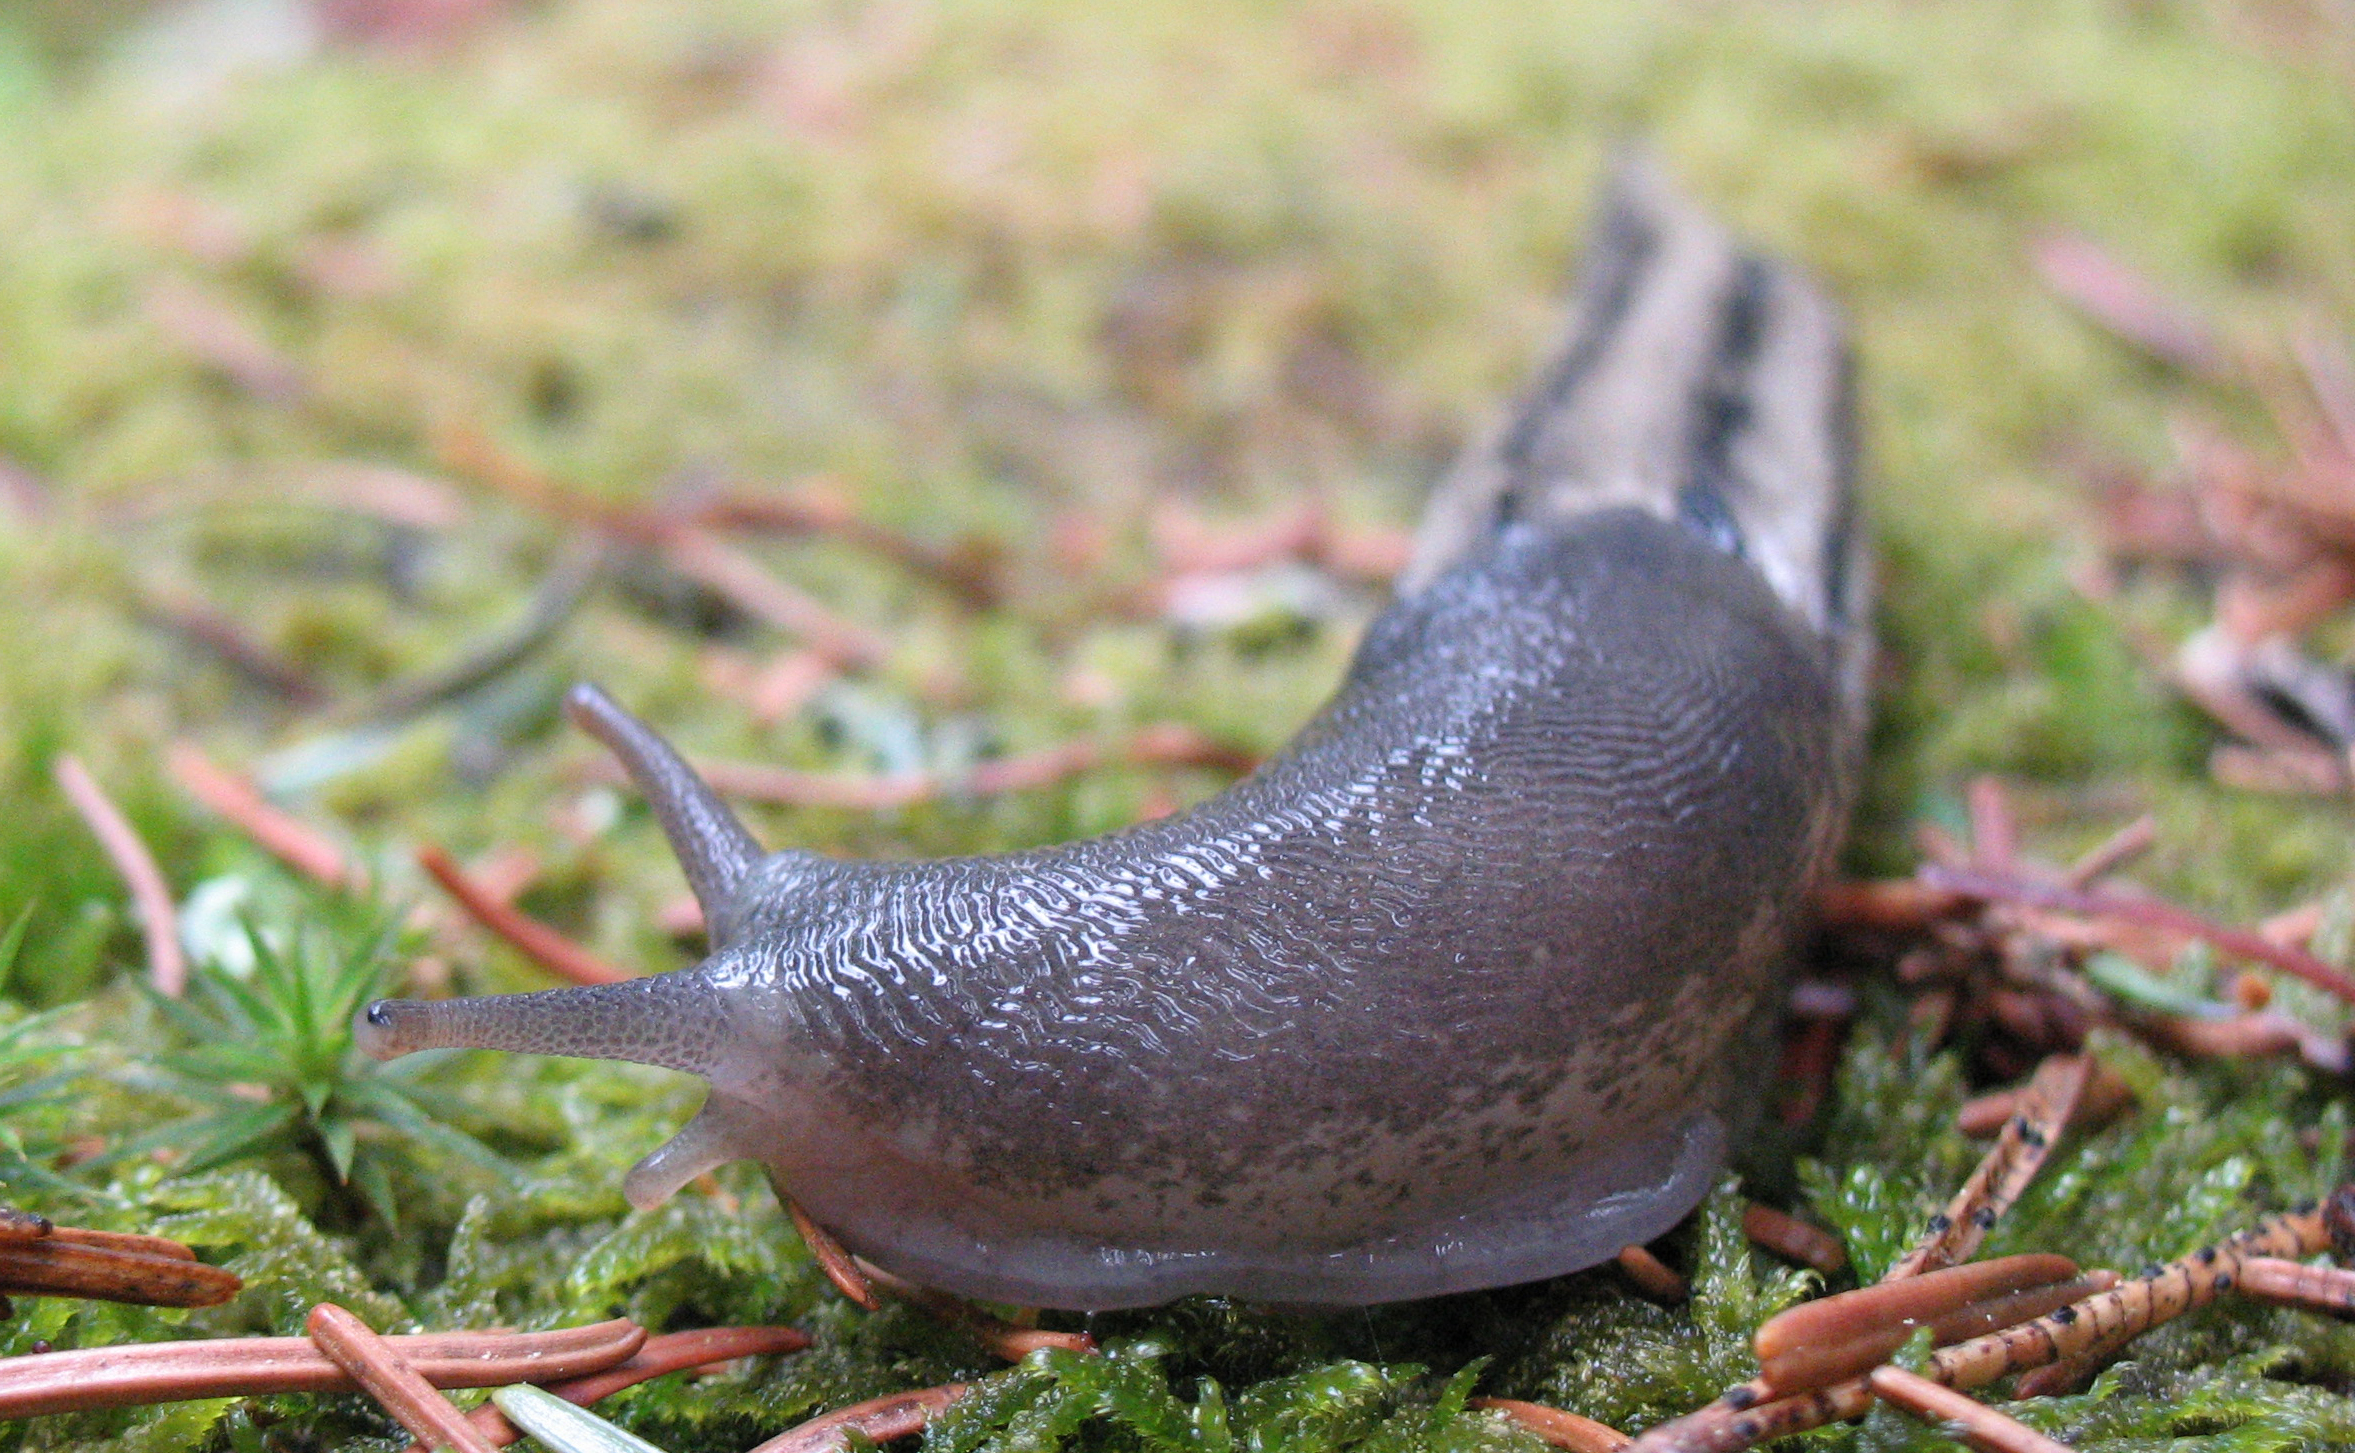 Ash-black slug | Buglife